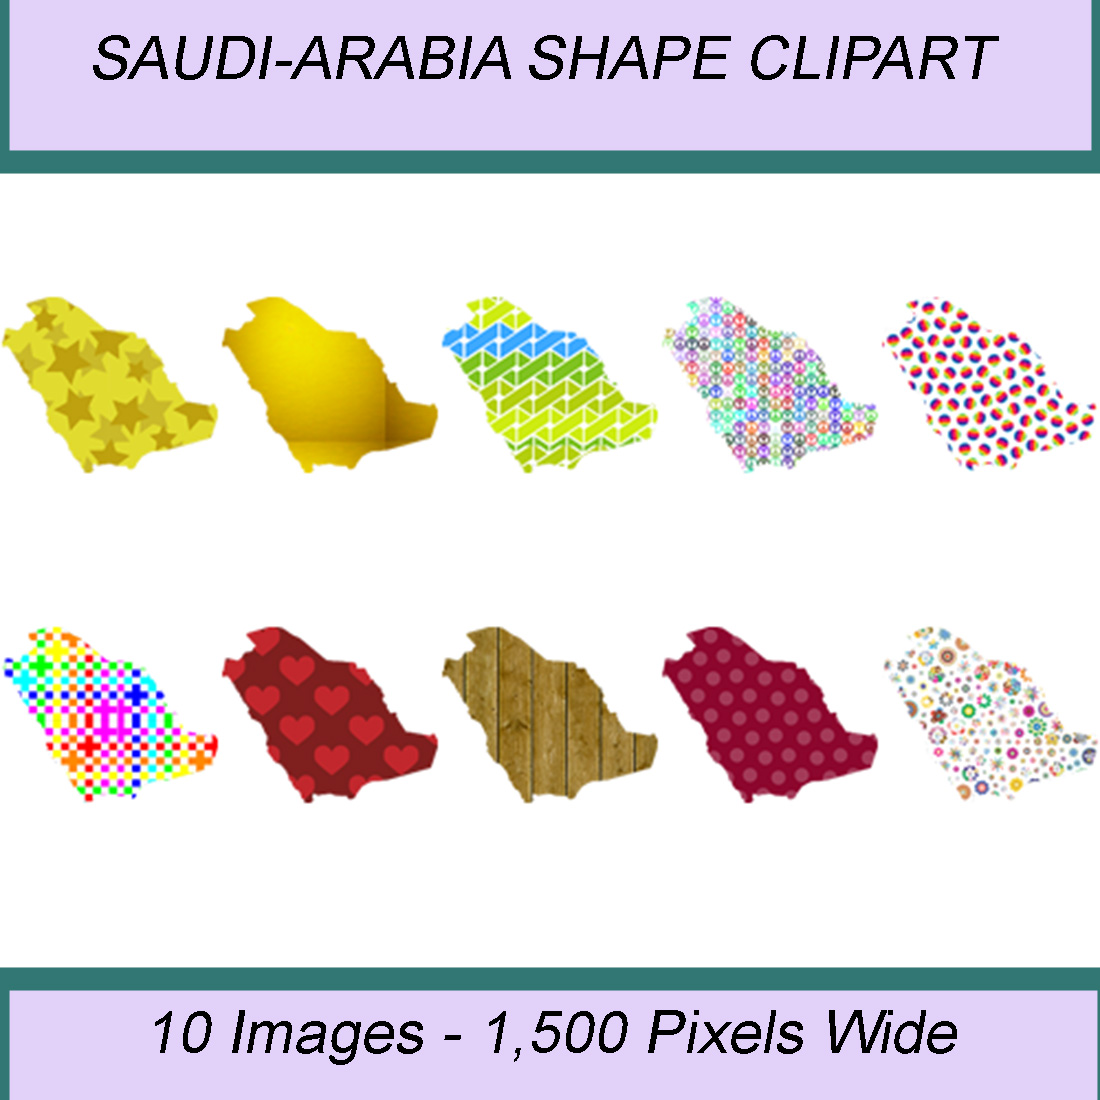 SAUDI-ARABIA SHAPE CLIPART ICONS cover image.